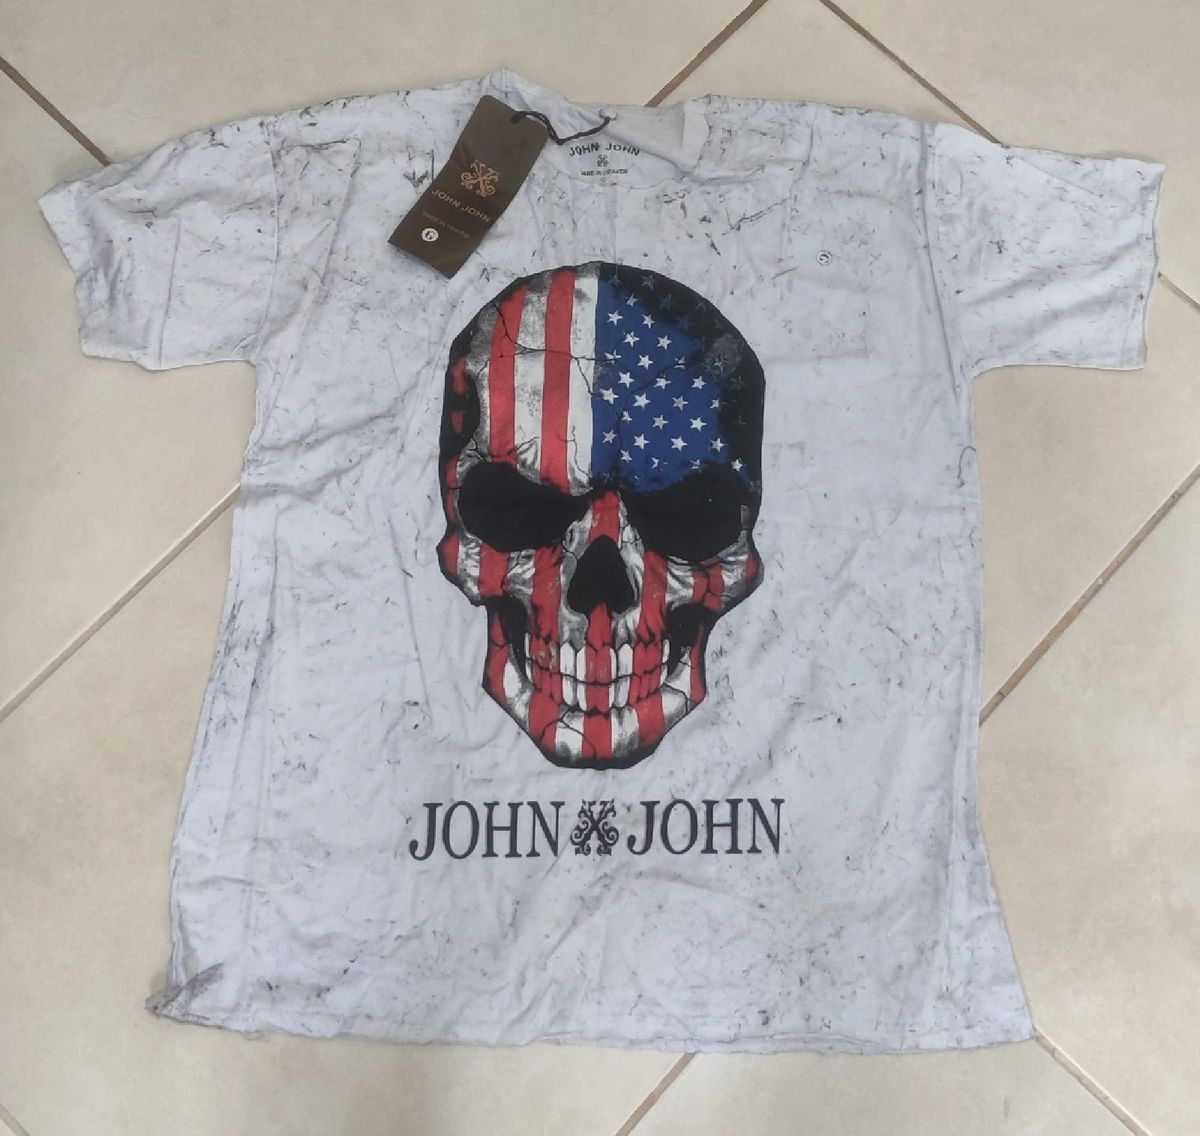 Camiseta John John Made In Heaven Azul Caveira, Camiseta Masculina John  John Nunca Usado 91477888